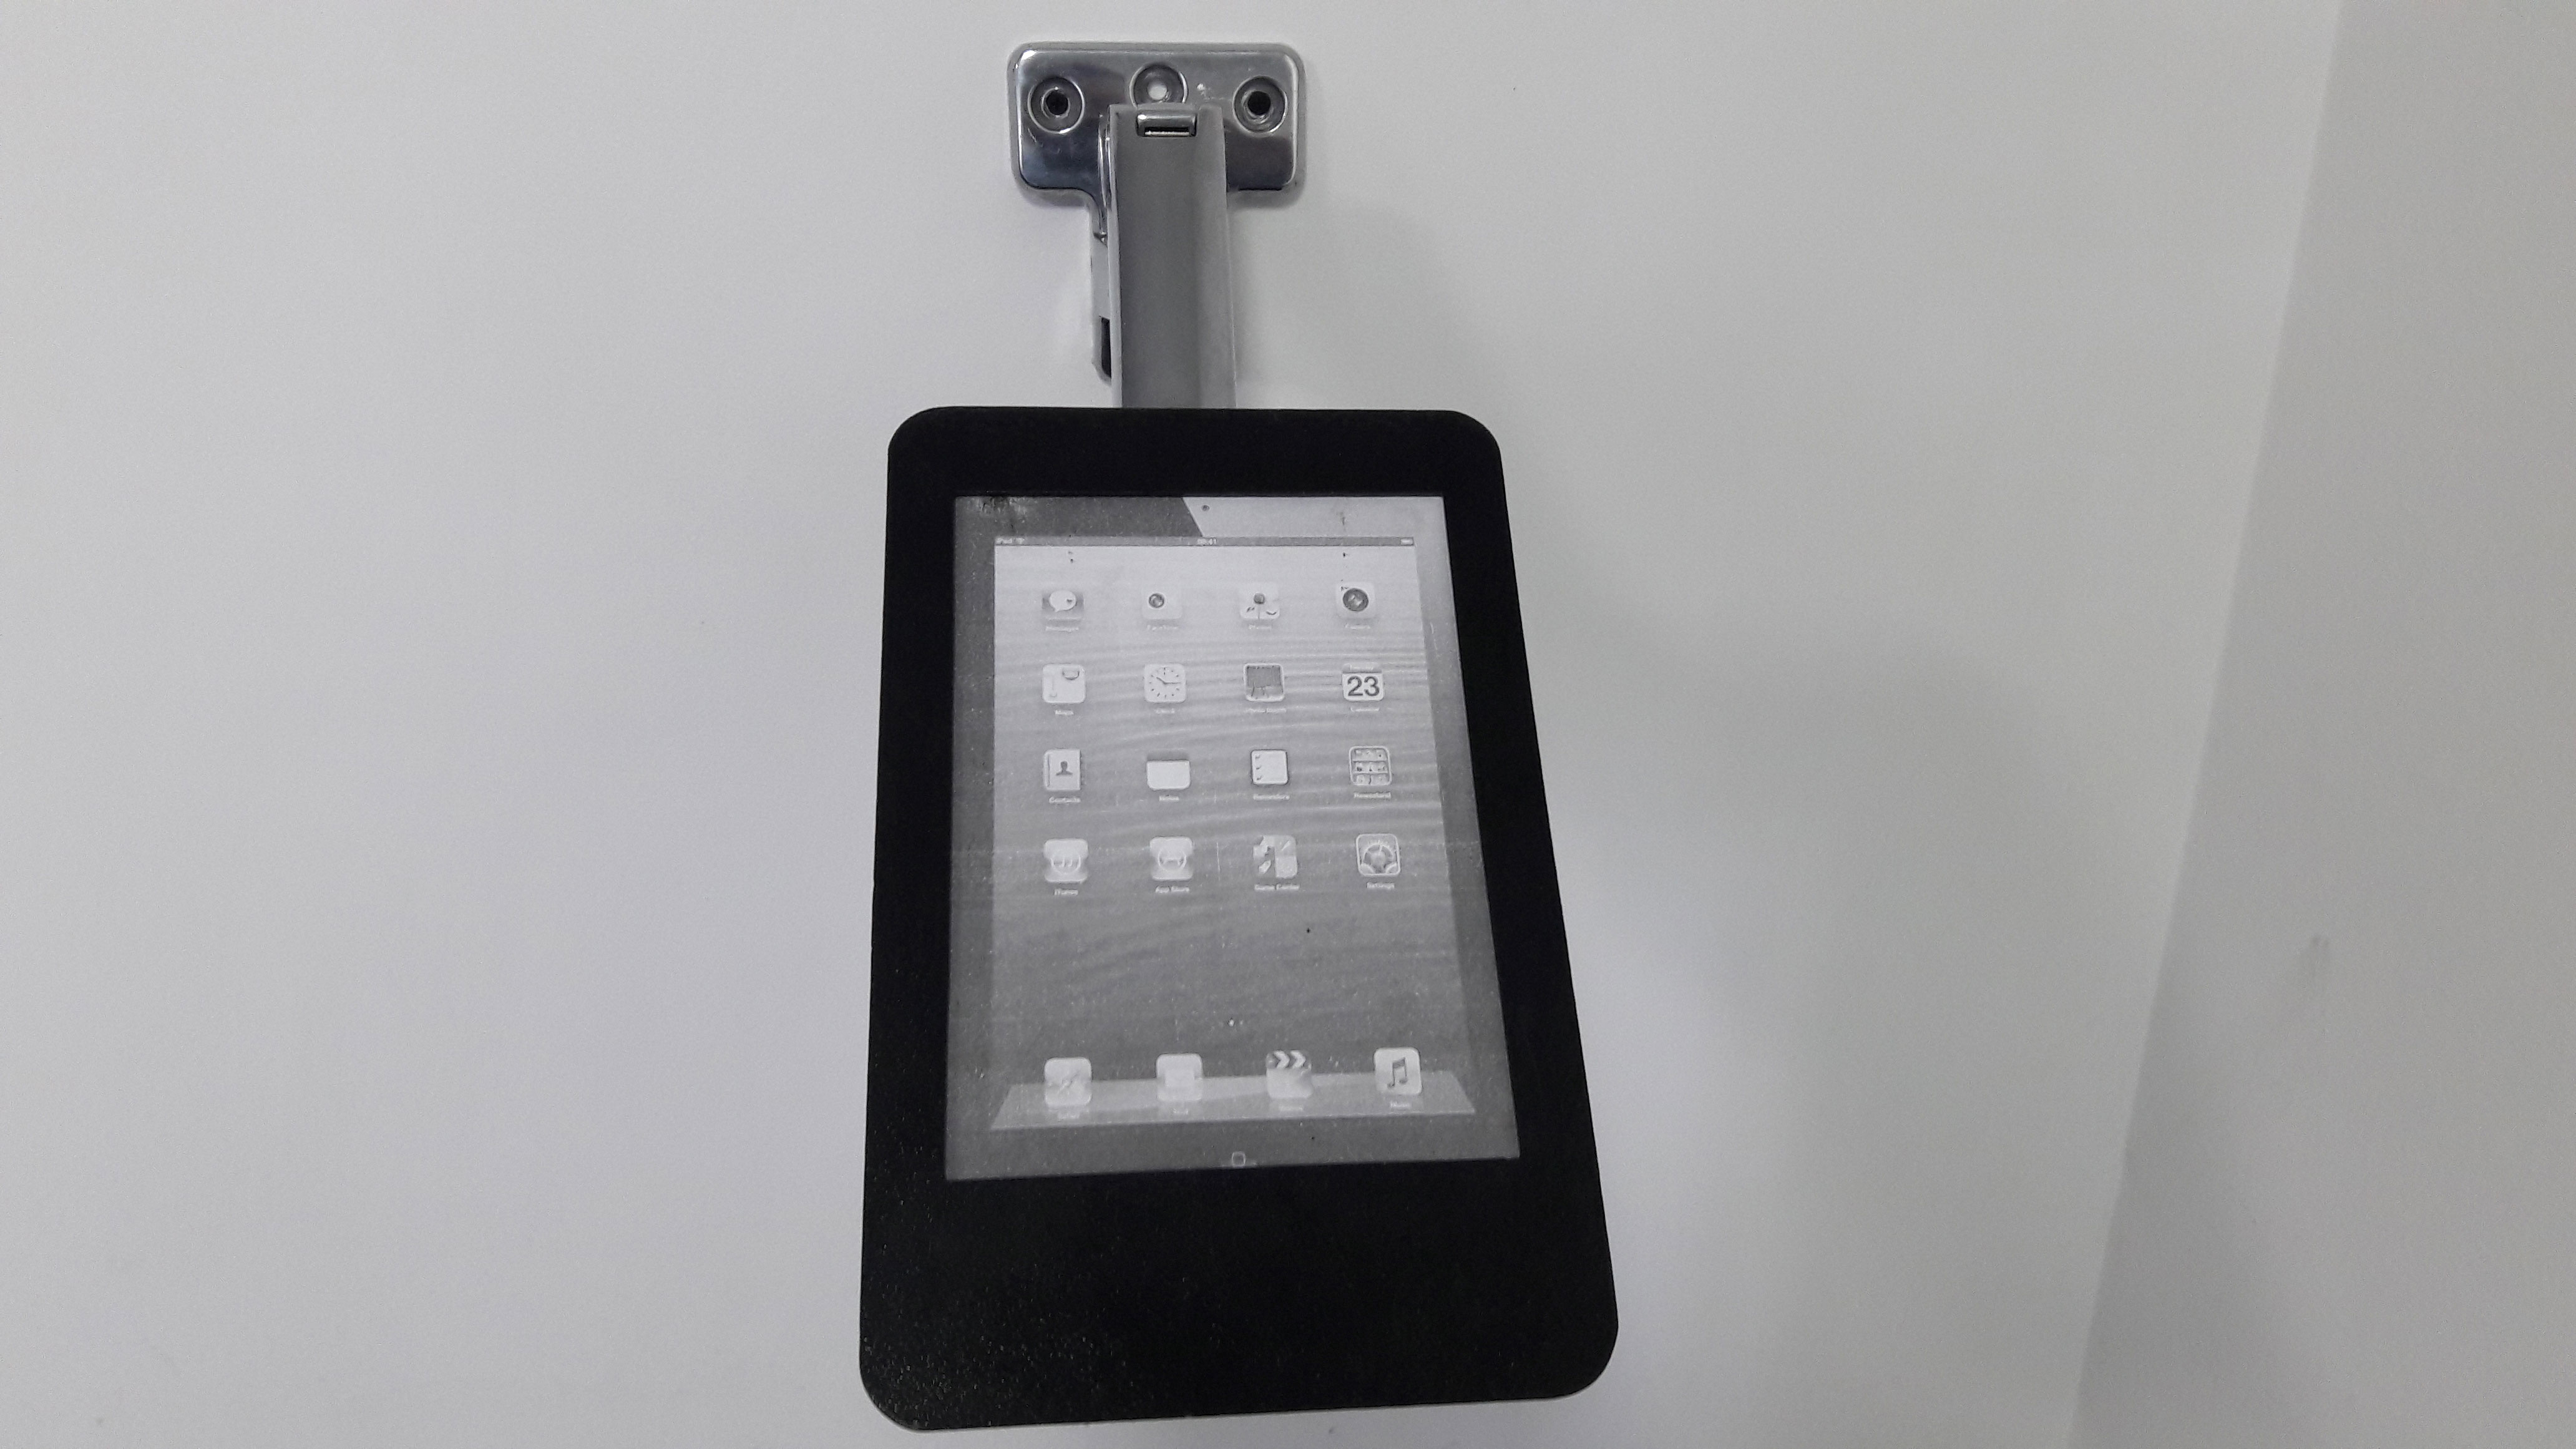 Sopoorte brazo antirrobo para tablets iPads